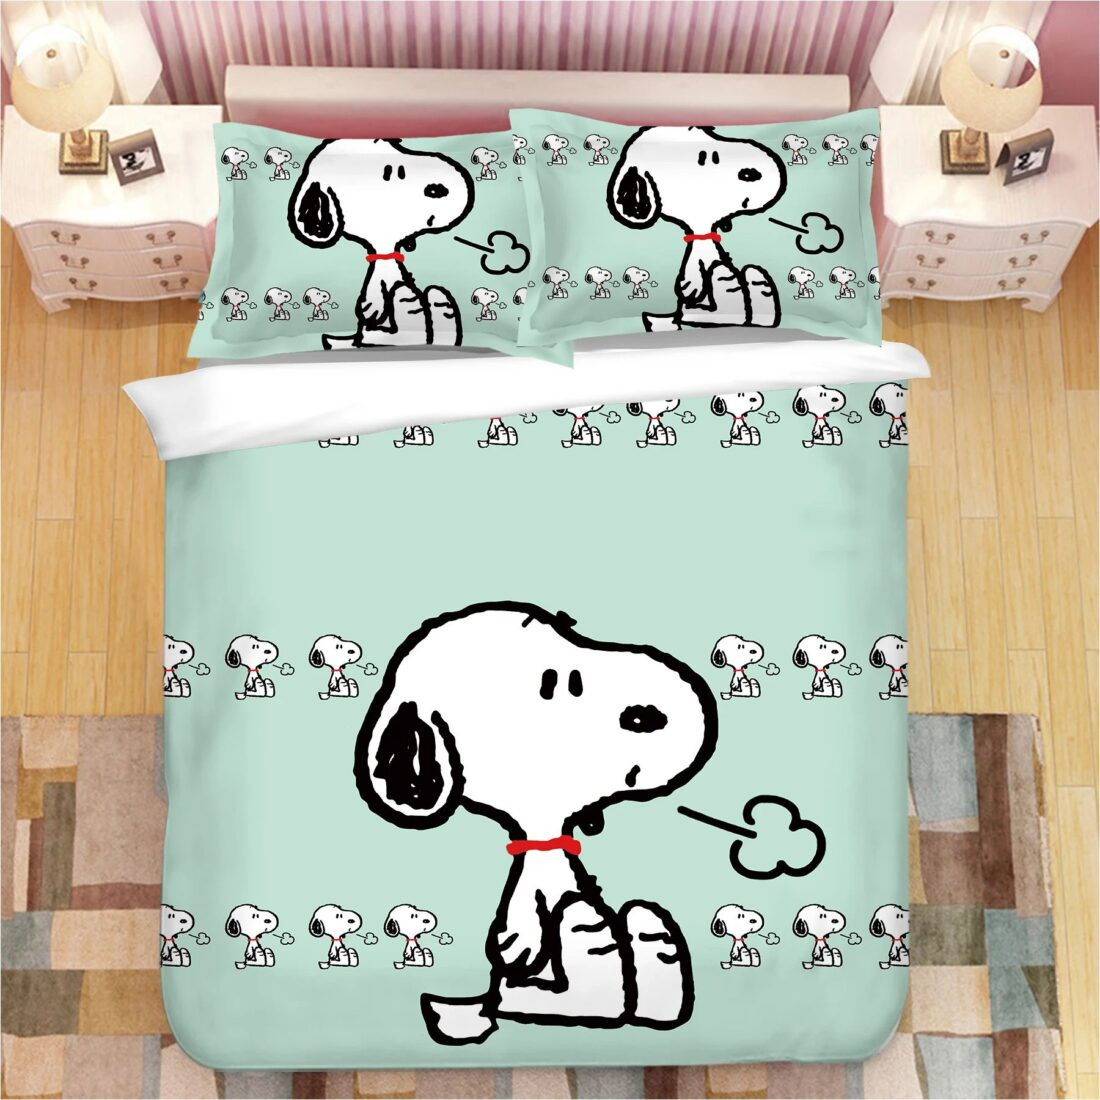 Peanuts Snoopy 10 Duvet Cover Set - Bedding Set